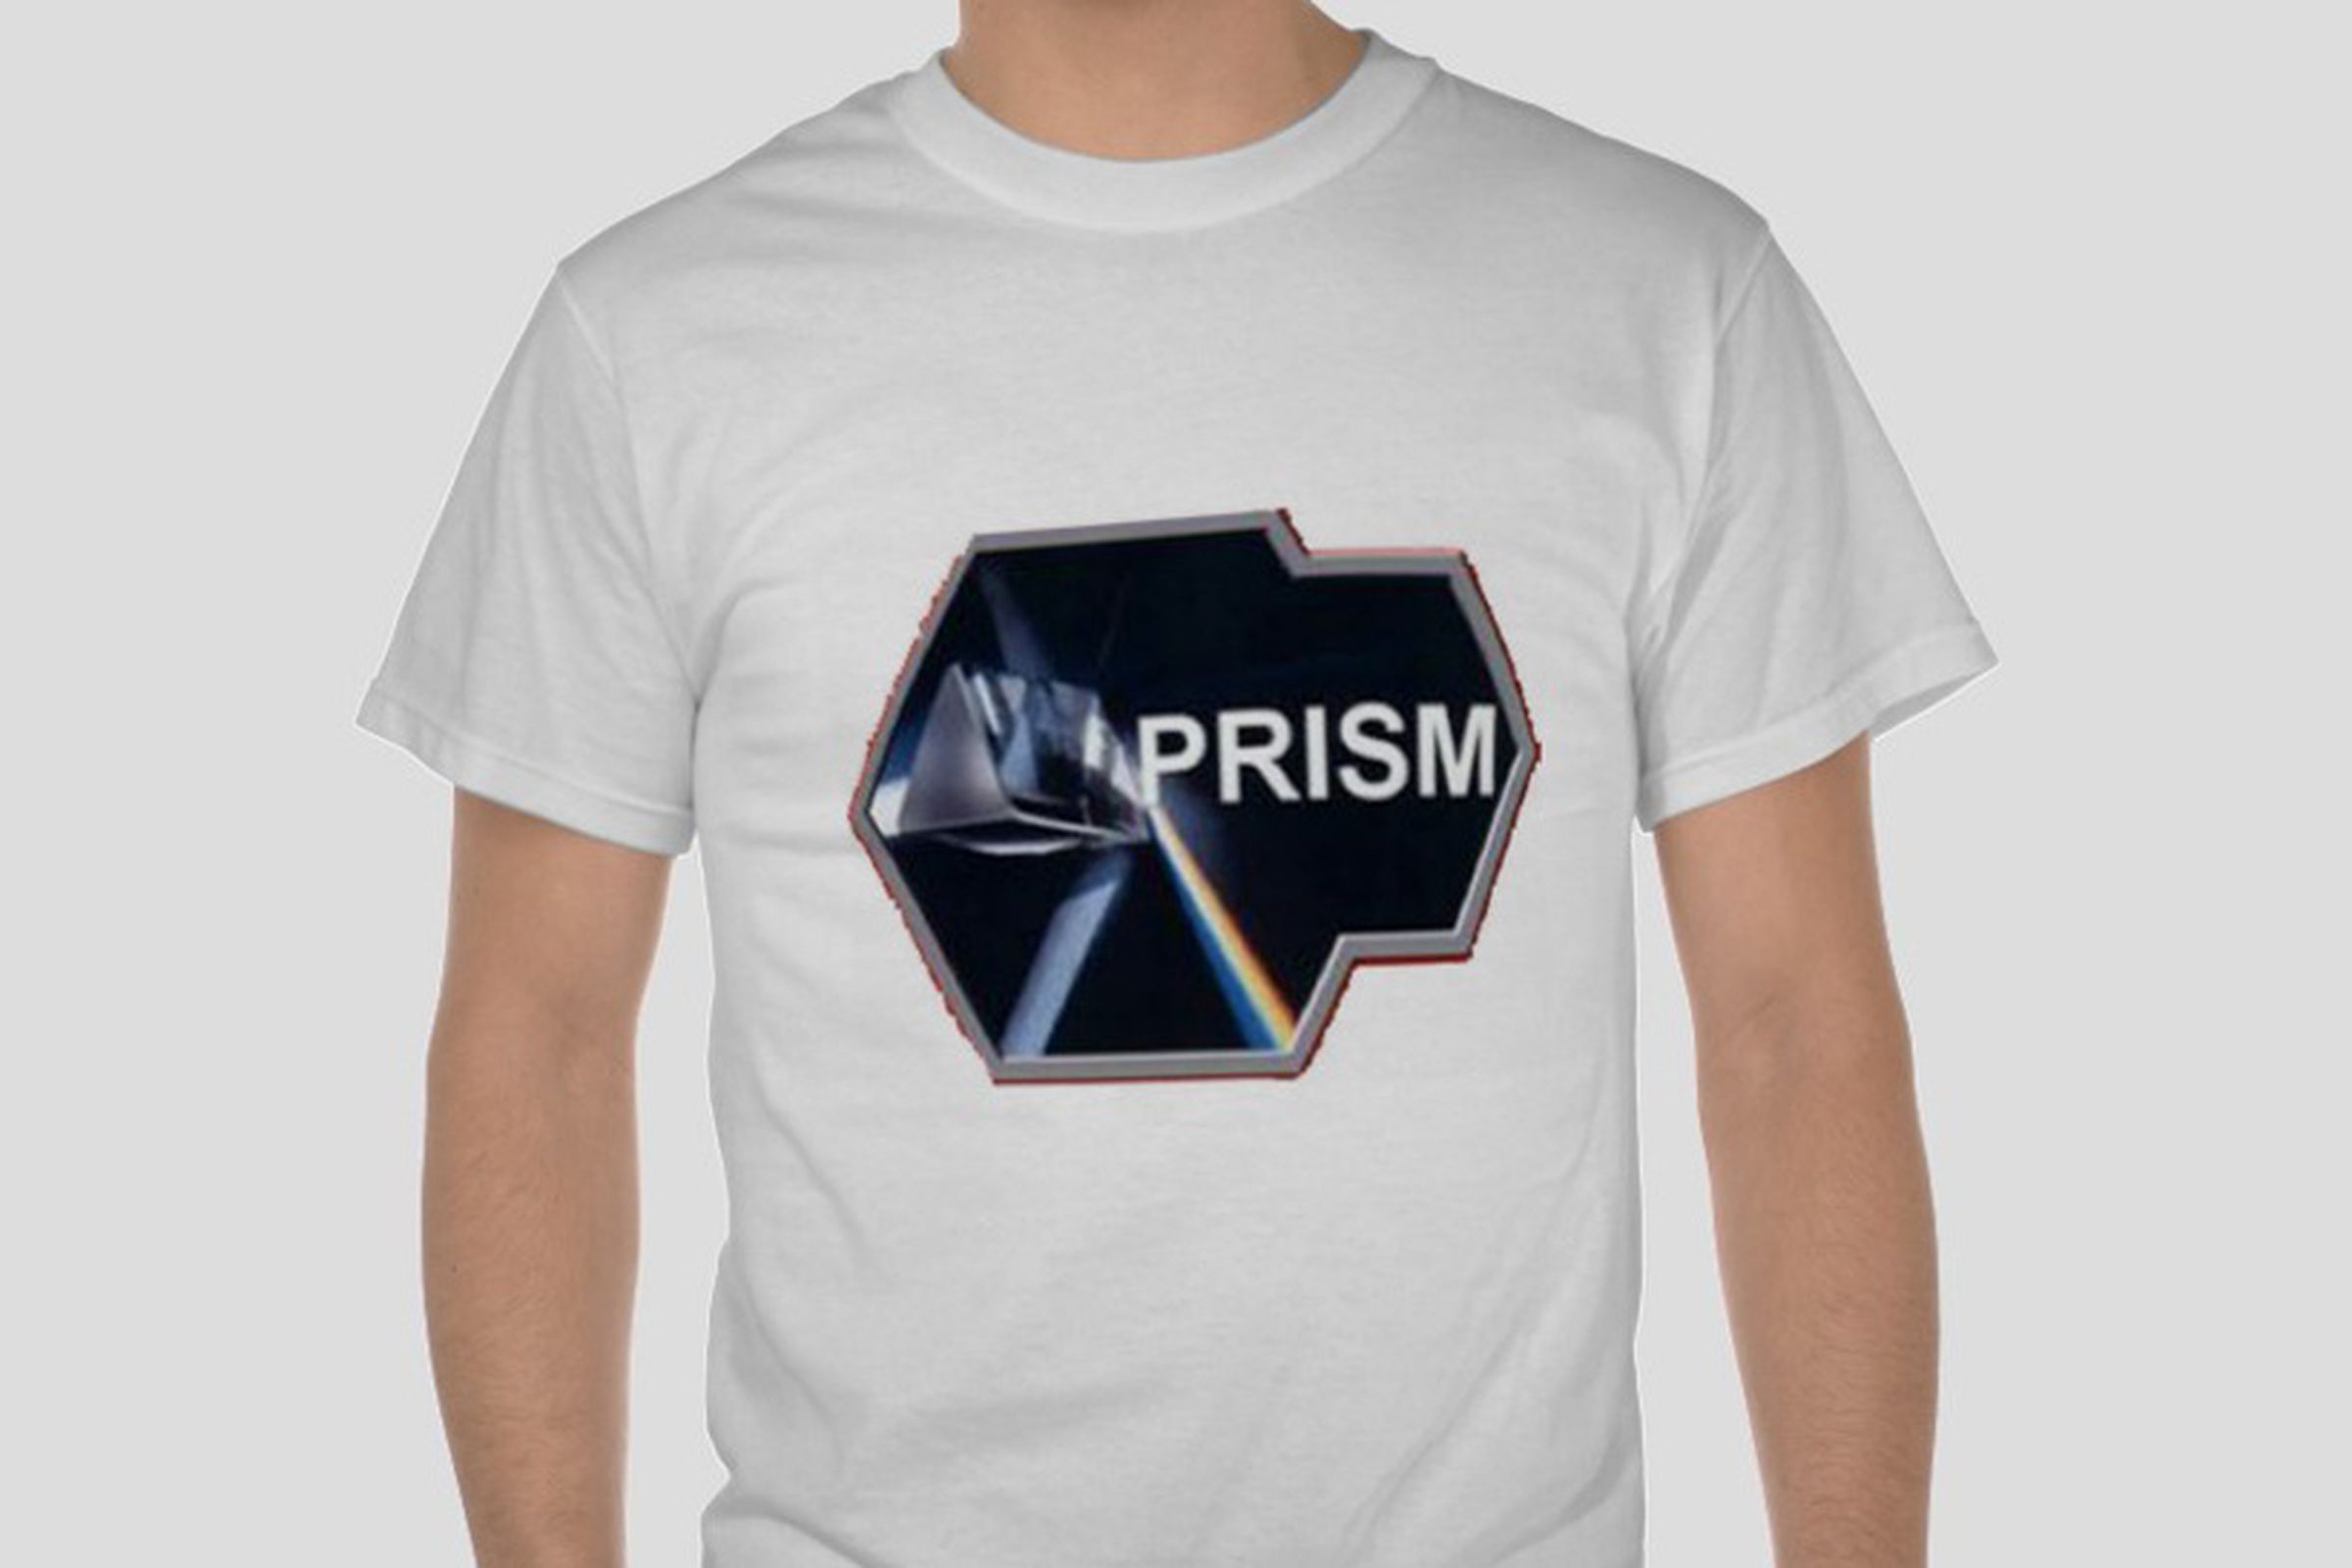 PRISIM Zazzle shirt